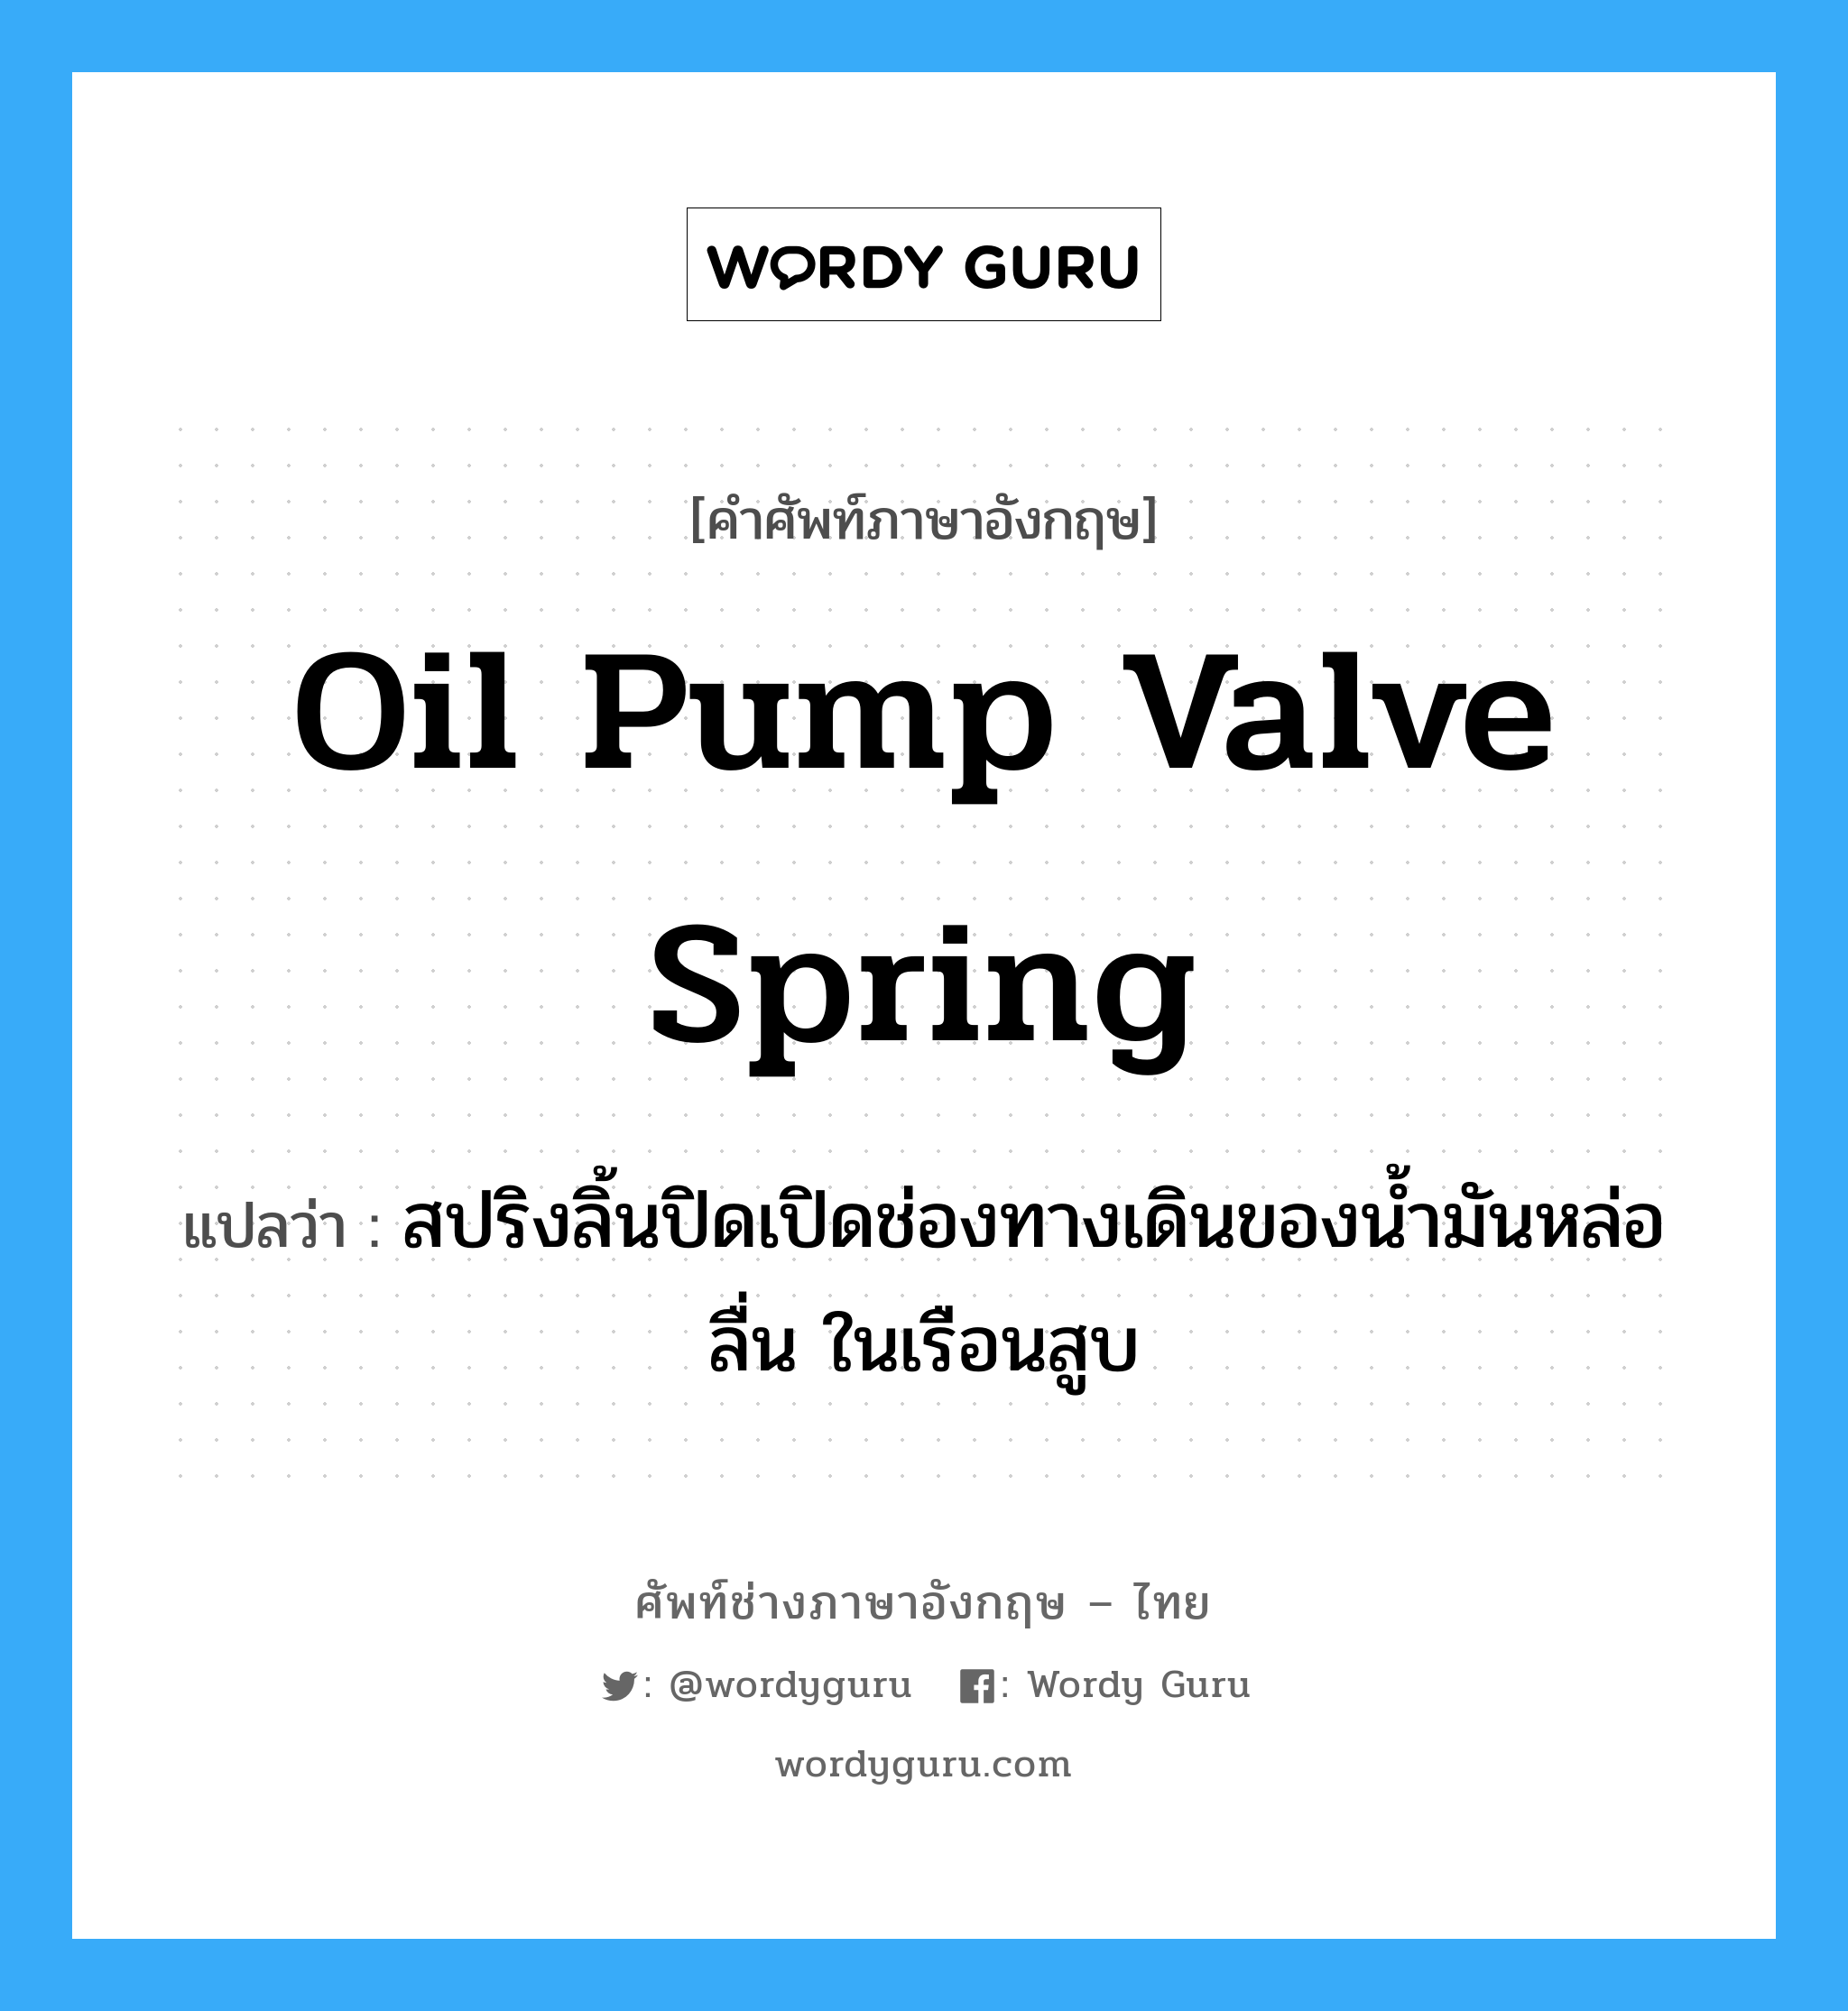 oil pump valve spring แปลว่า?, คำศัพท์ช่างภาษาอังกฤษ - ไทย oil pump valve spring คำศัพท์ภาษาอังกฤษ oil pump valve spring แปลว่า สปริงลิ้นปิดเปิดช่องทางเดินของน้ำมันหล่อลื่น ในเรือนสูบ